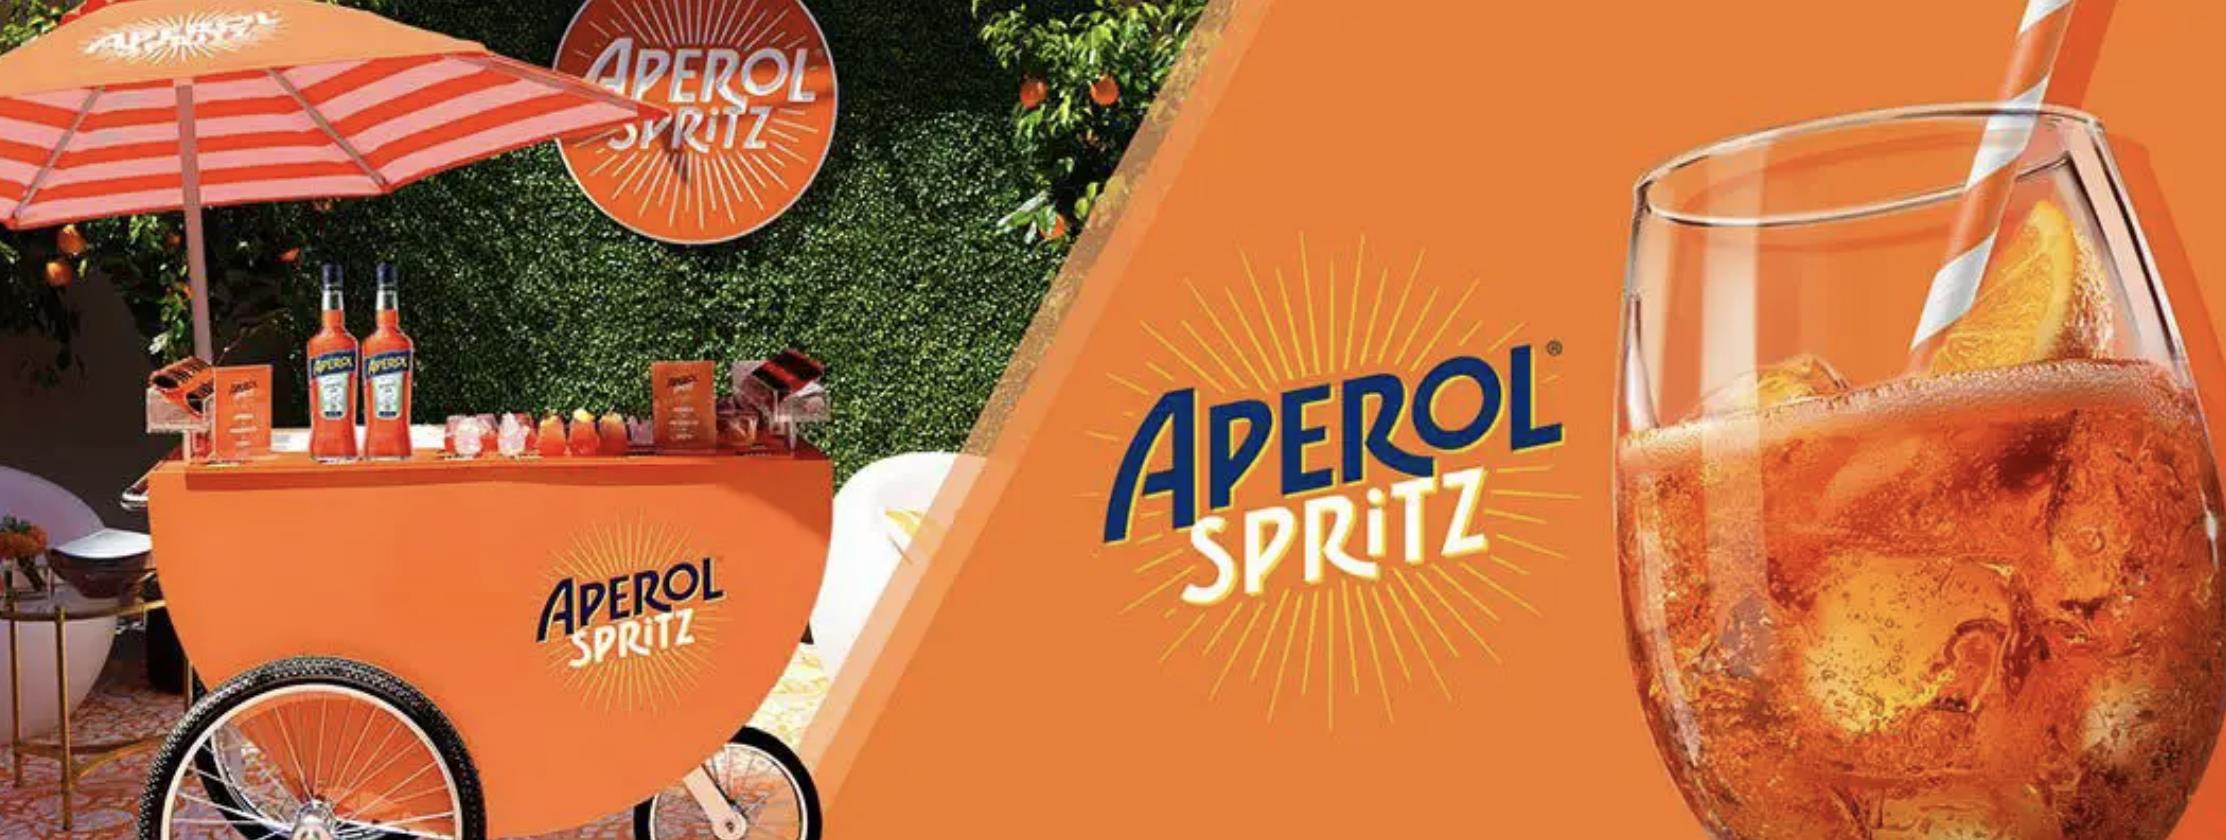 Aperol Spritz - Share the Joy Campaign